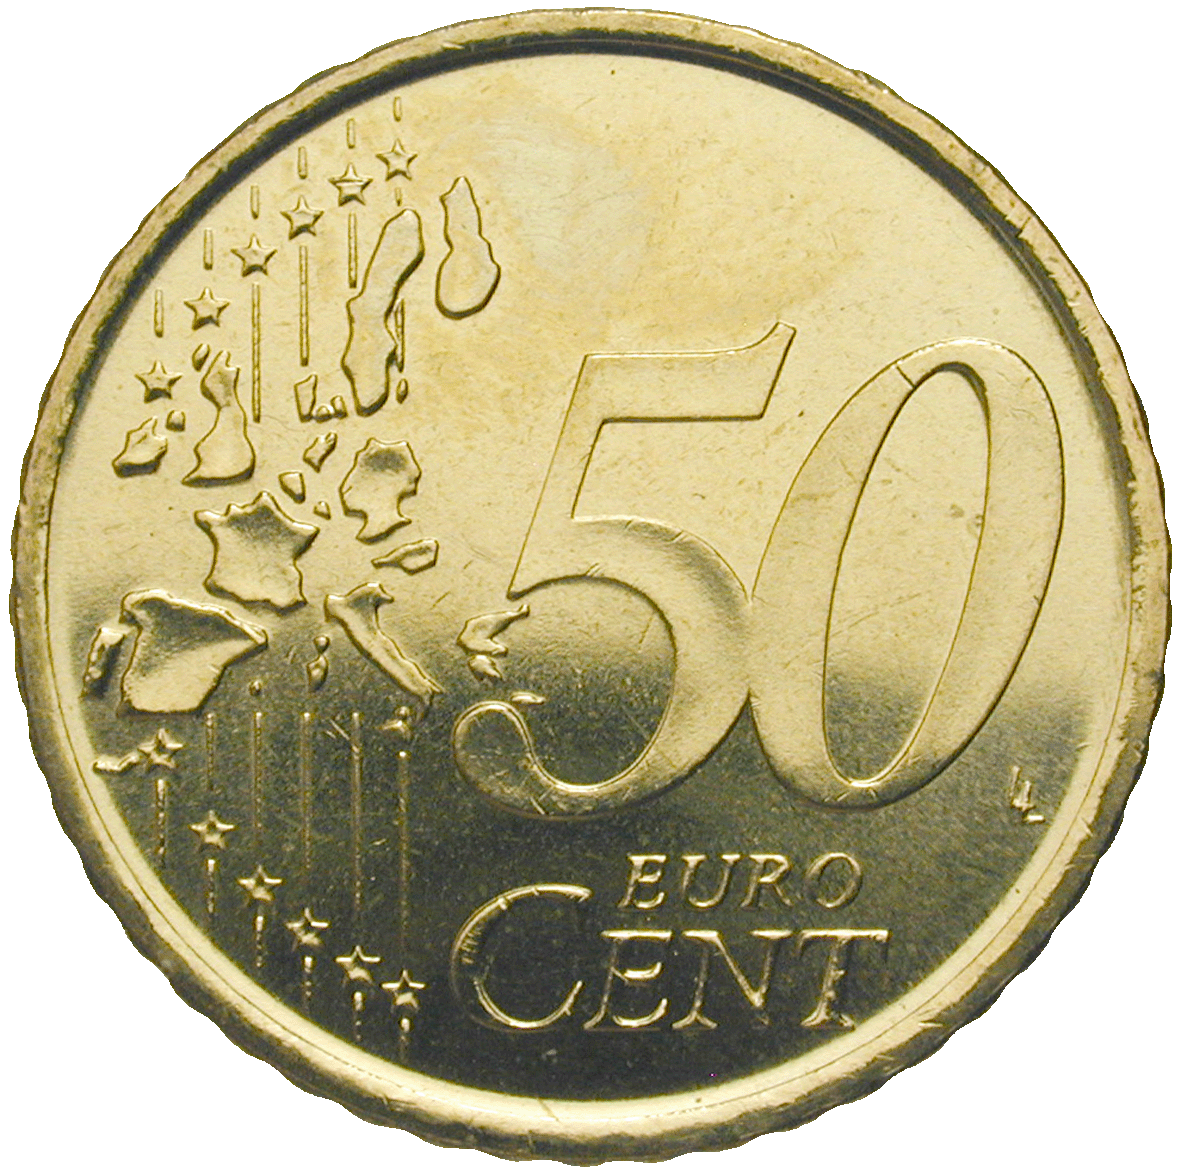 Königreich Spanien, Juan Carlos, 50 Eurocent 1999 (reverse)